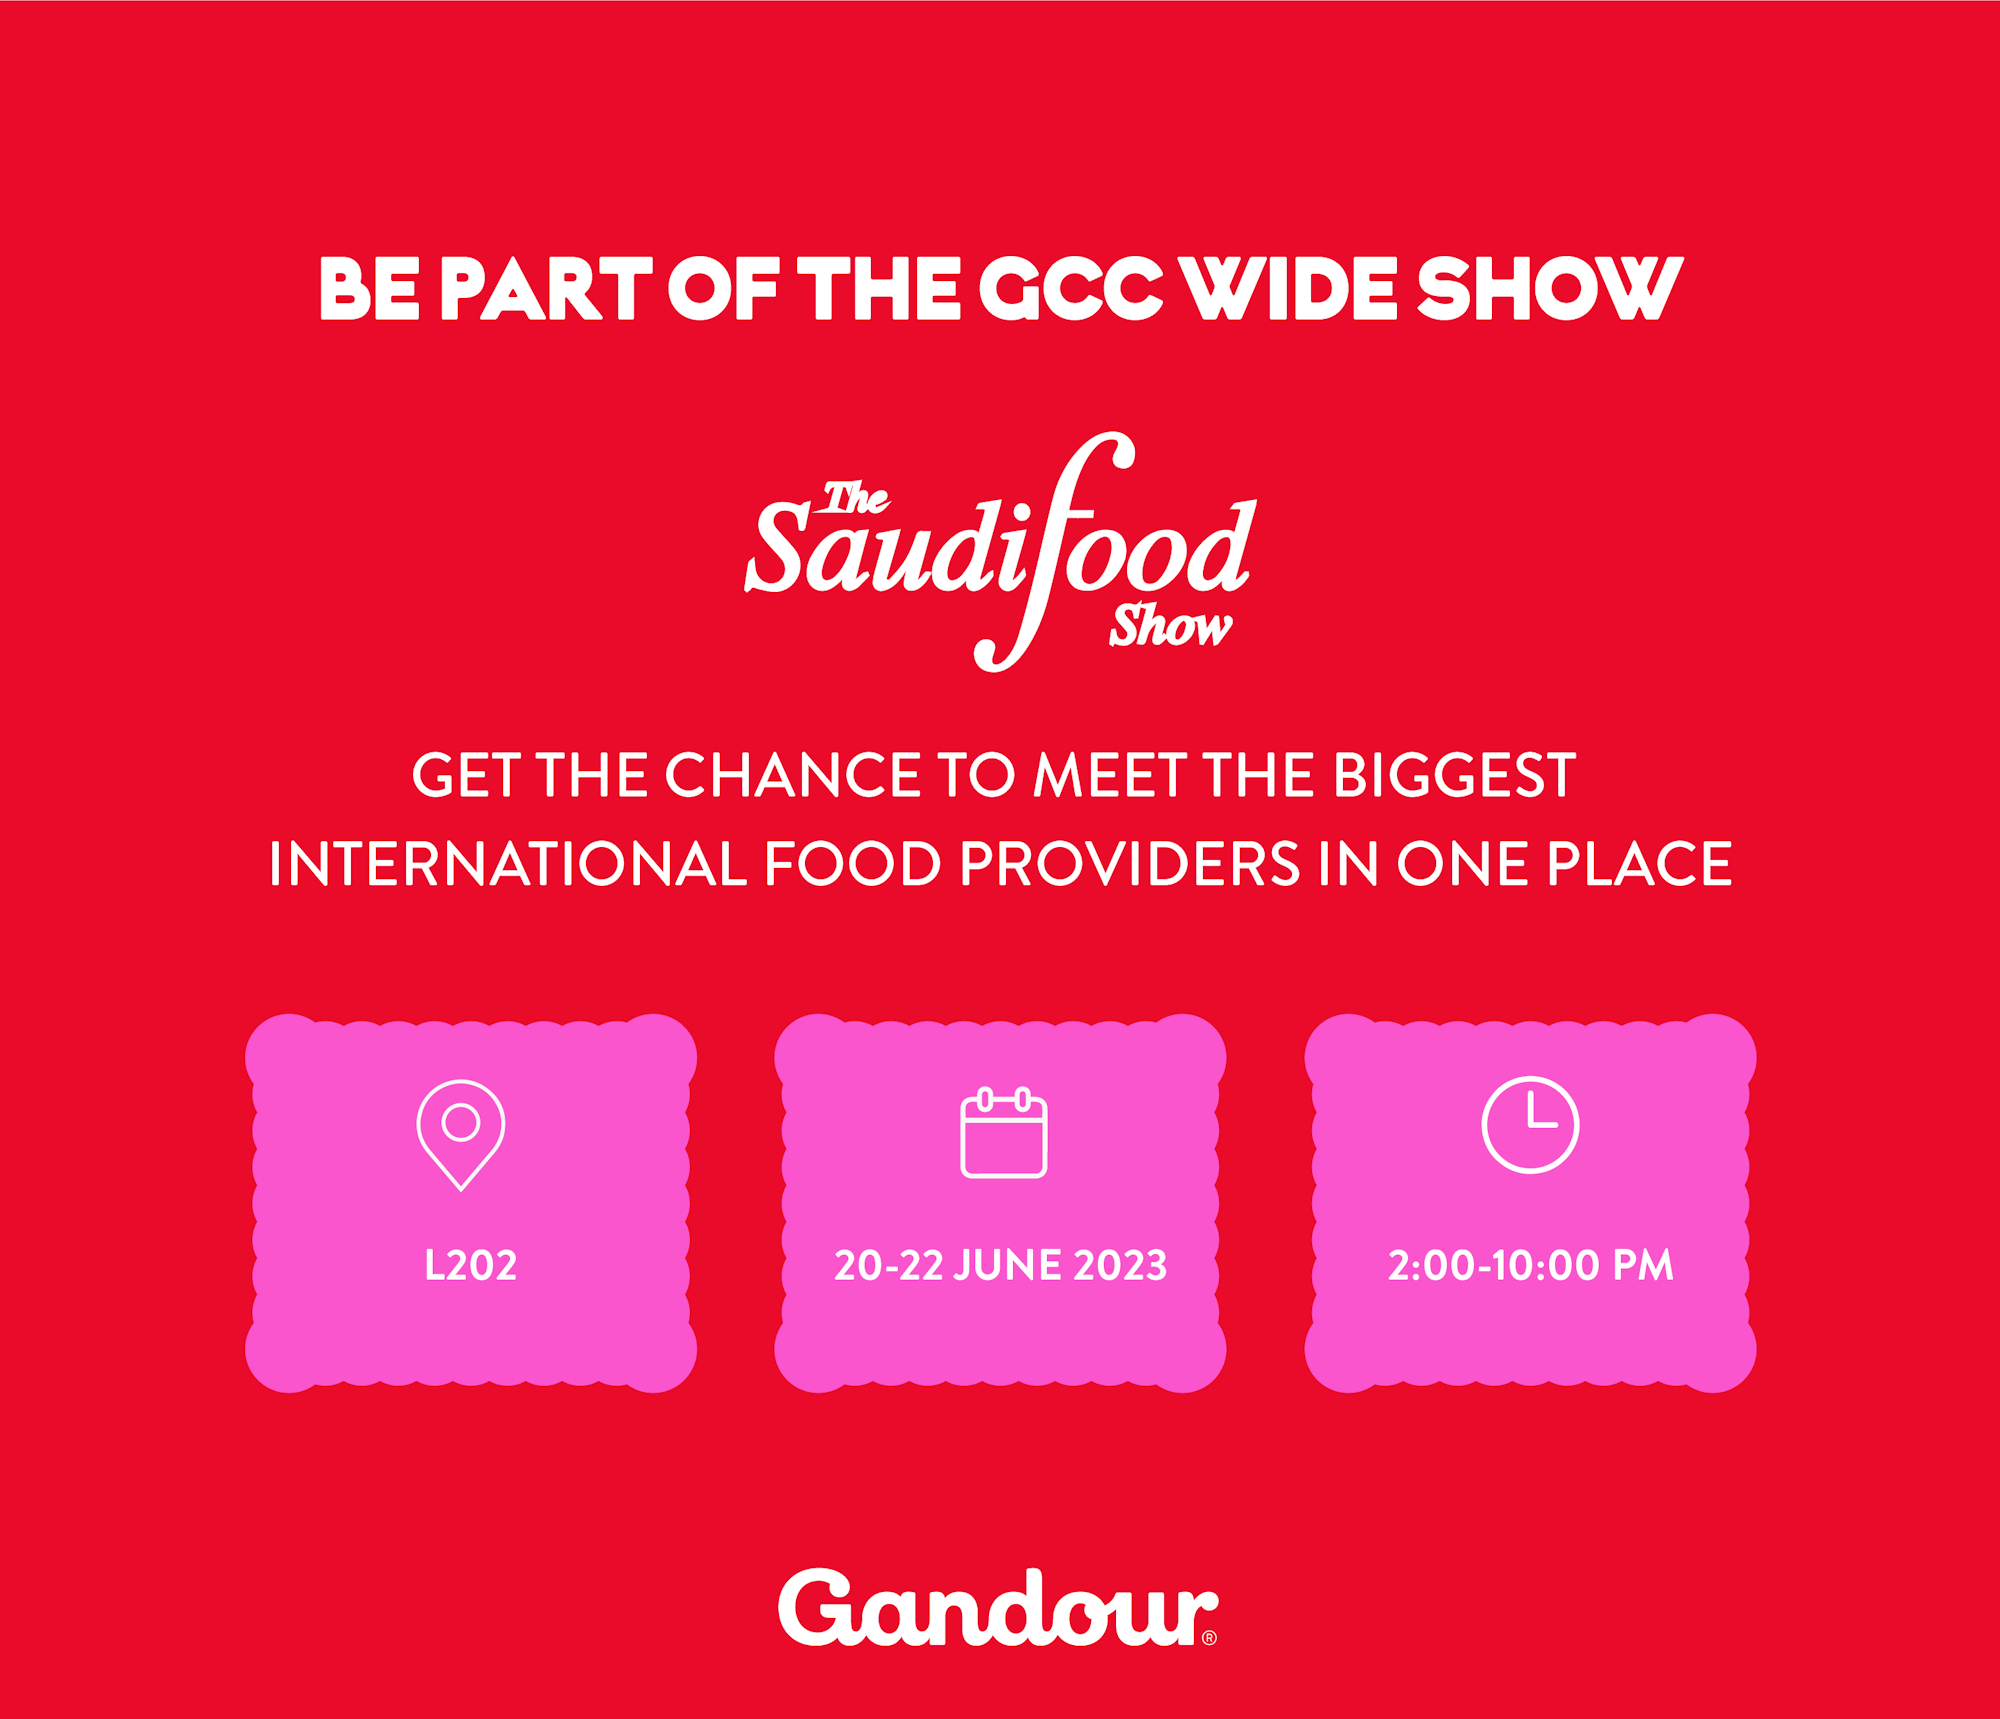 Saudi Food Show